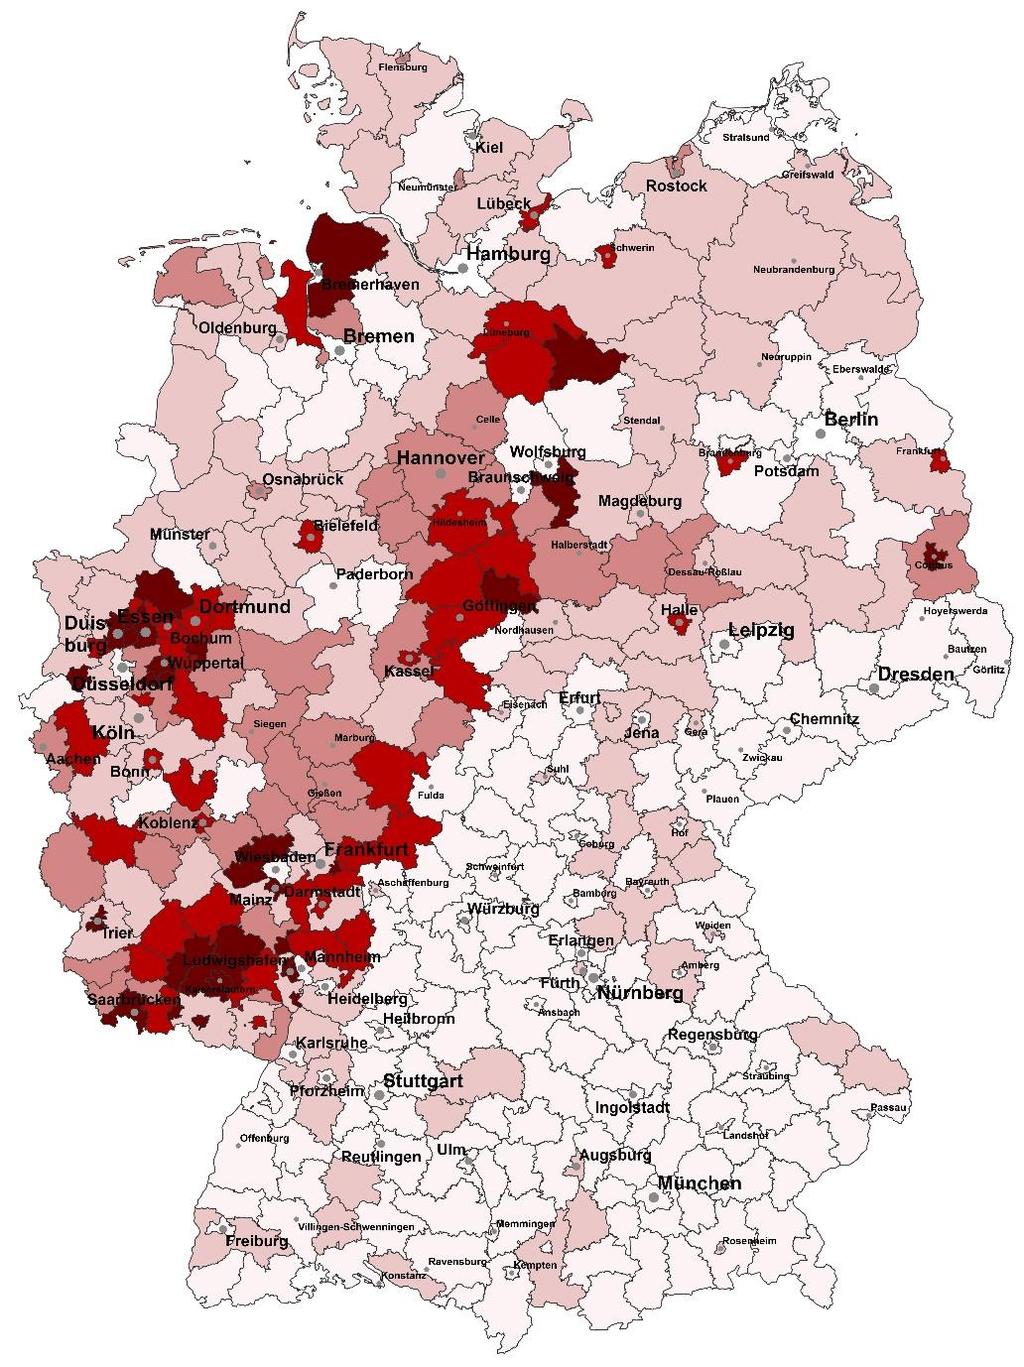 Kassenkredite 2010 Bundesweit in Mrd.